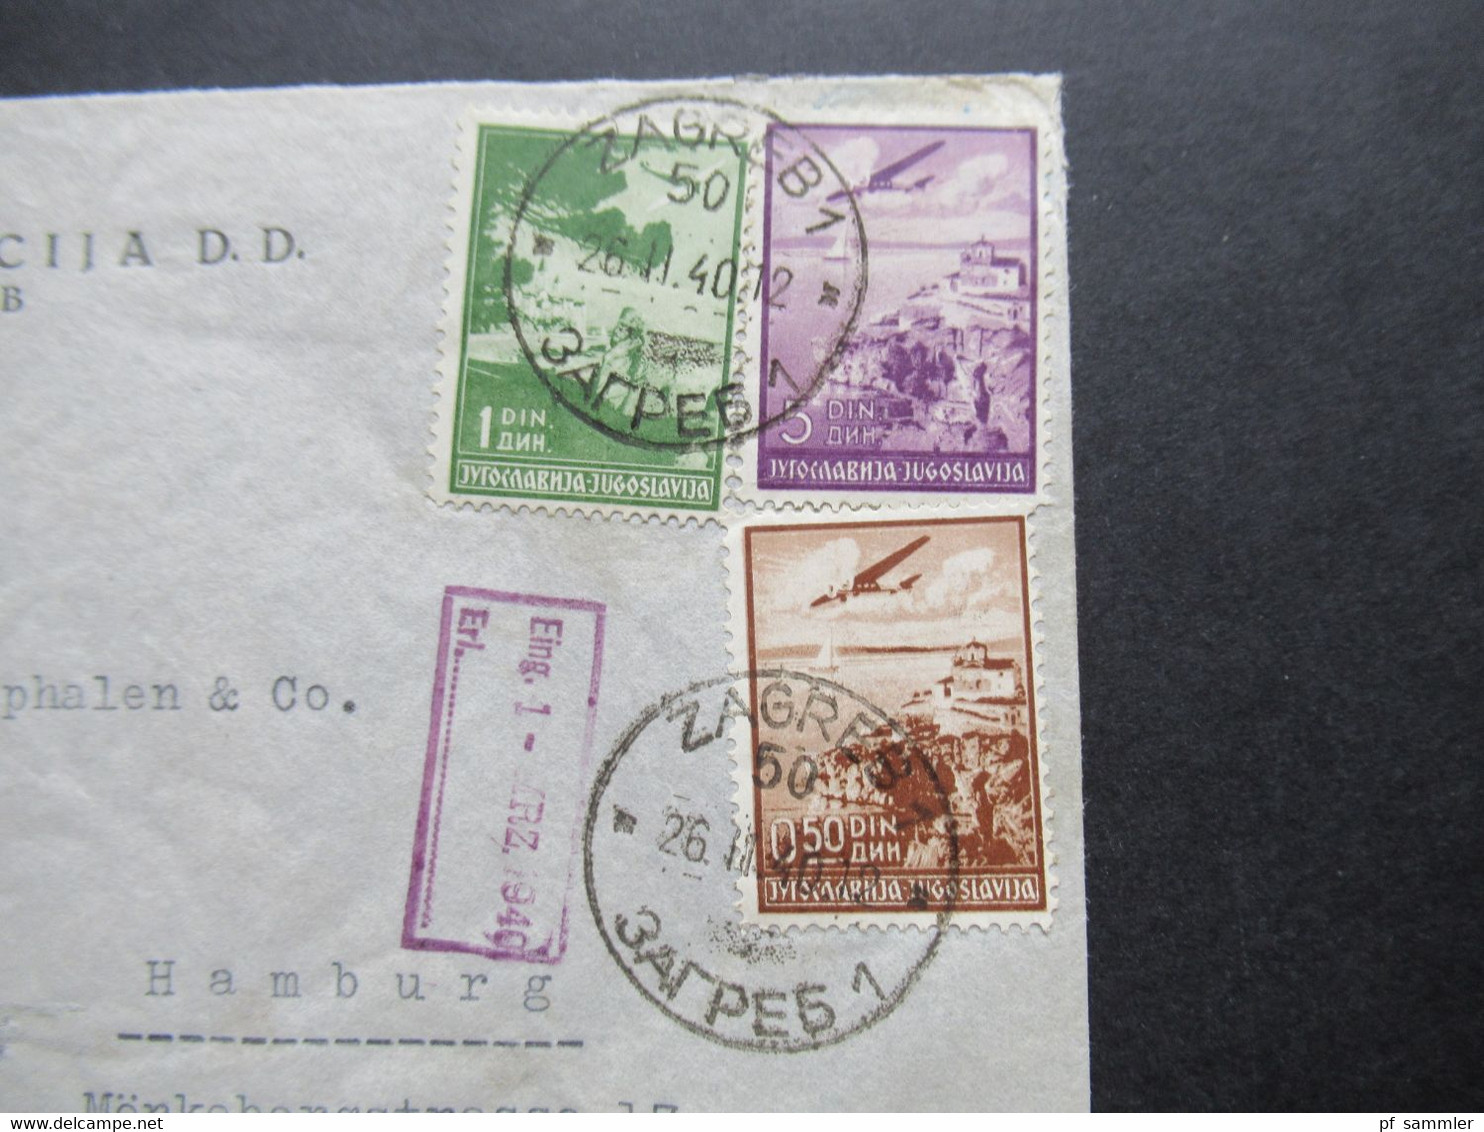 Jugoslawien 1940 Zensurbeleg / OKW Zensur / Mehrfachzensur Luftpost Jugofarmacija D.D. An Westphalen & Co. In Hamburg - Briefe U. Dokumente